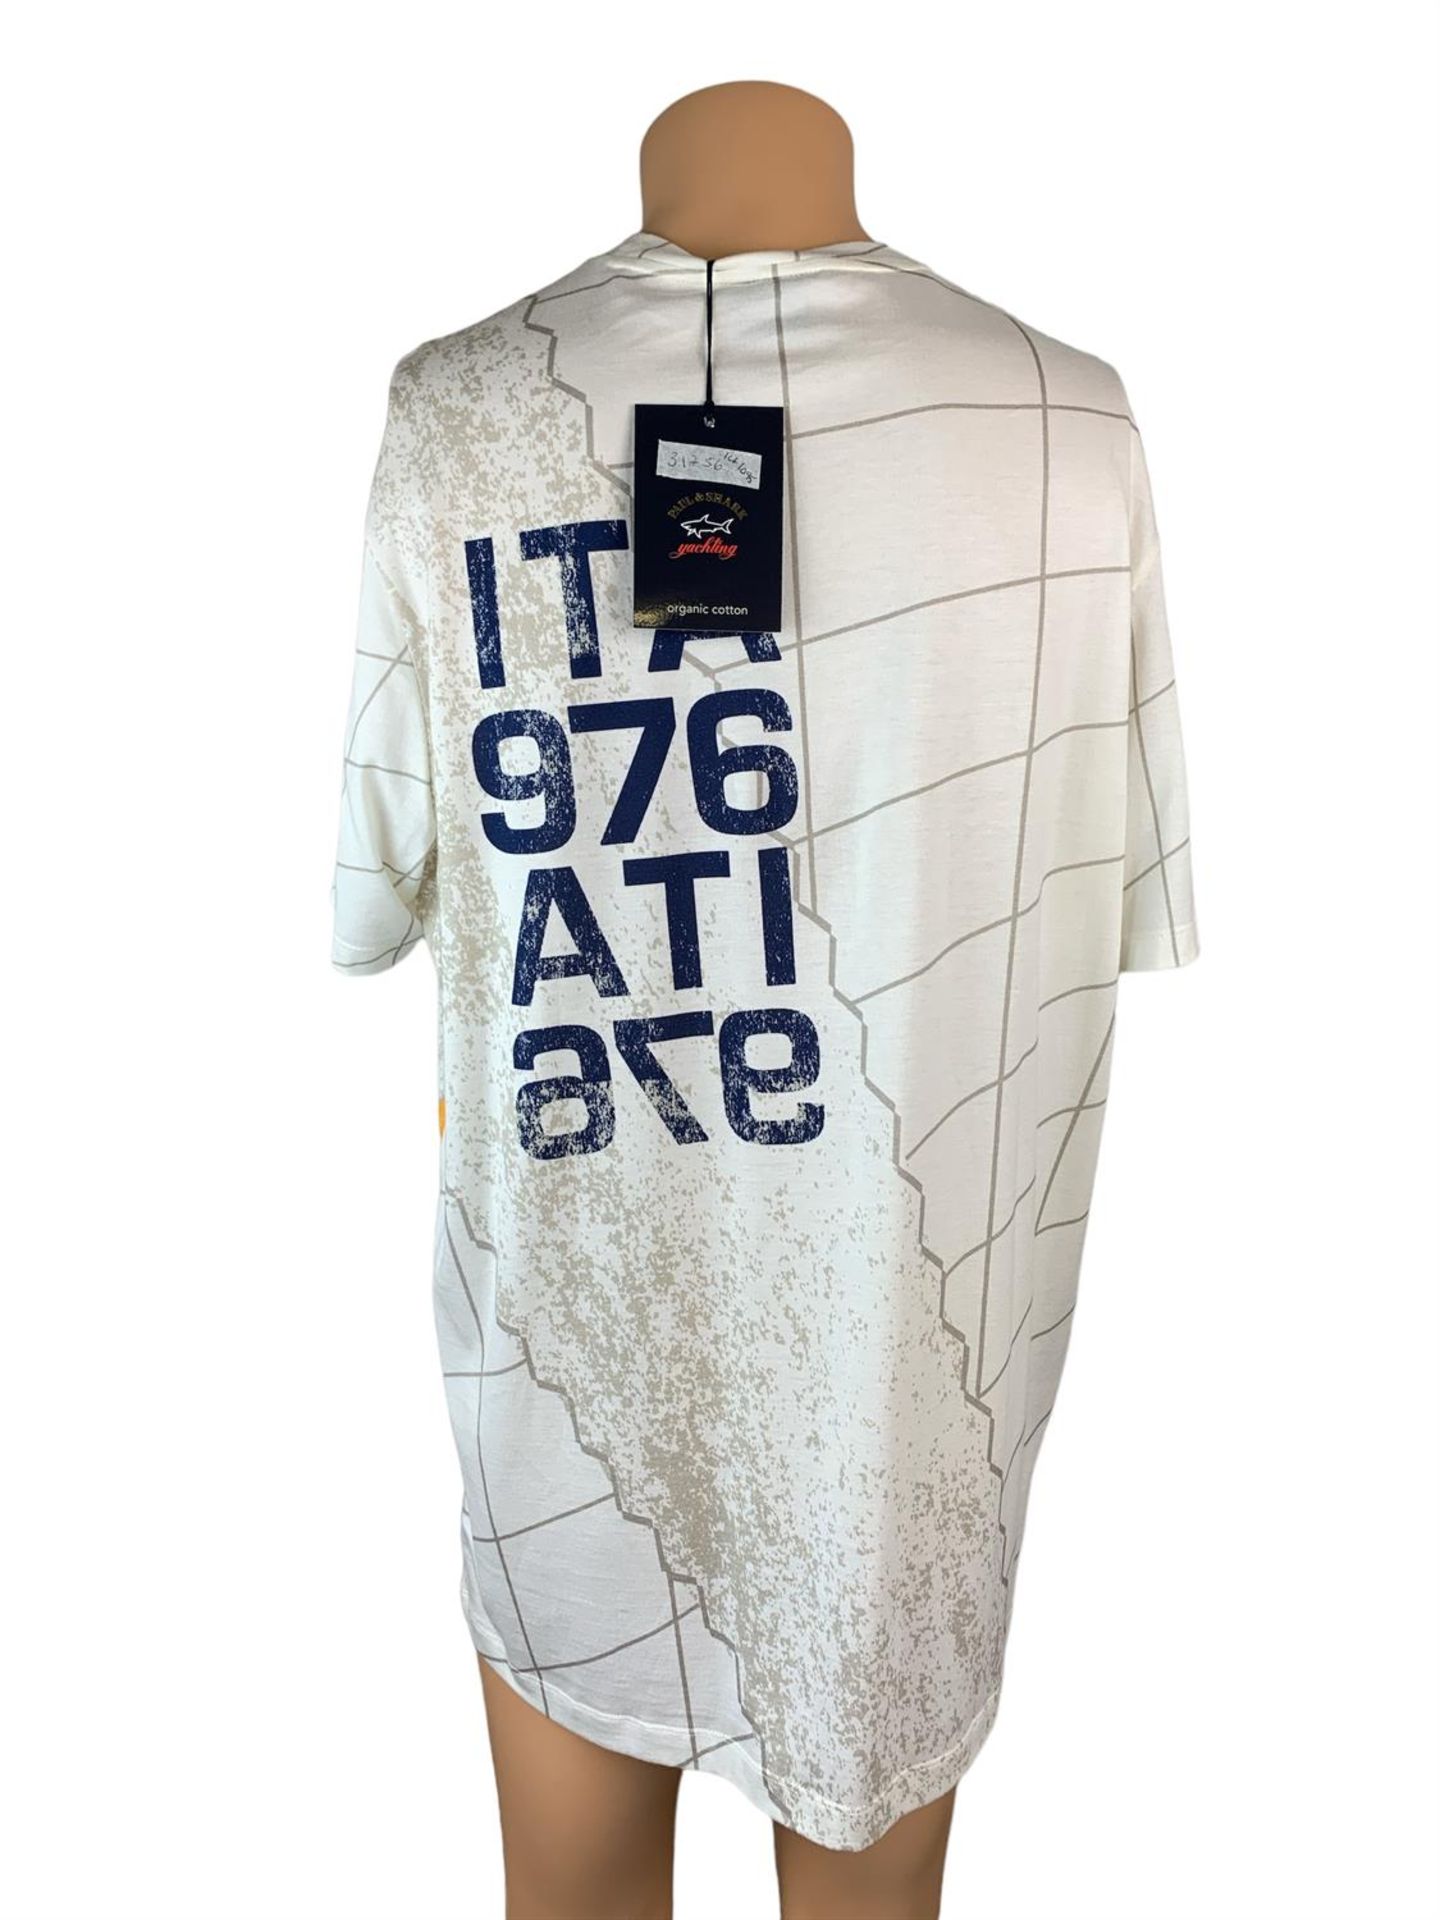 Paul & Shark T-Shirt - Organic Pattened - White - Size XL - 21411093 - RRP £199 - Image 2 of 2